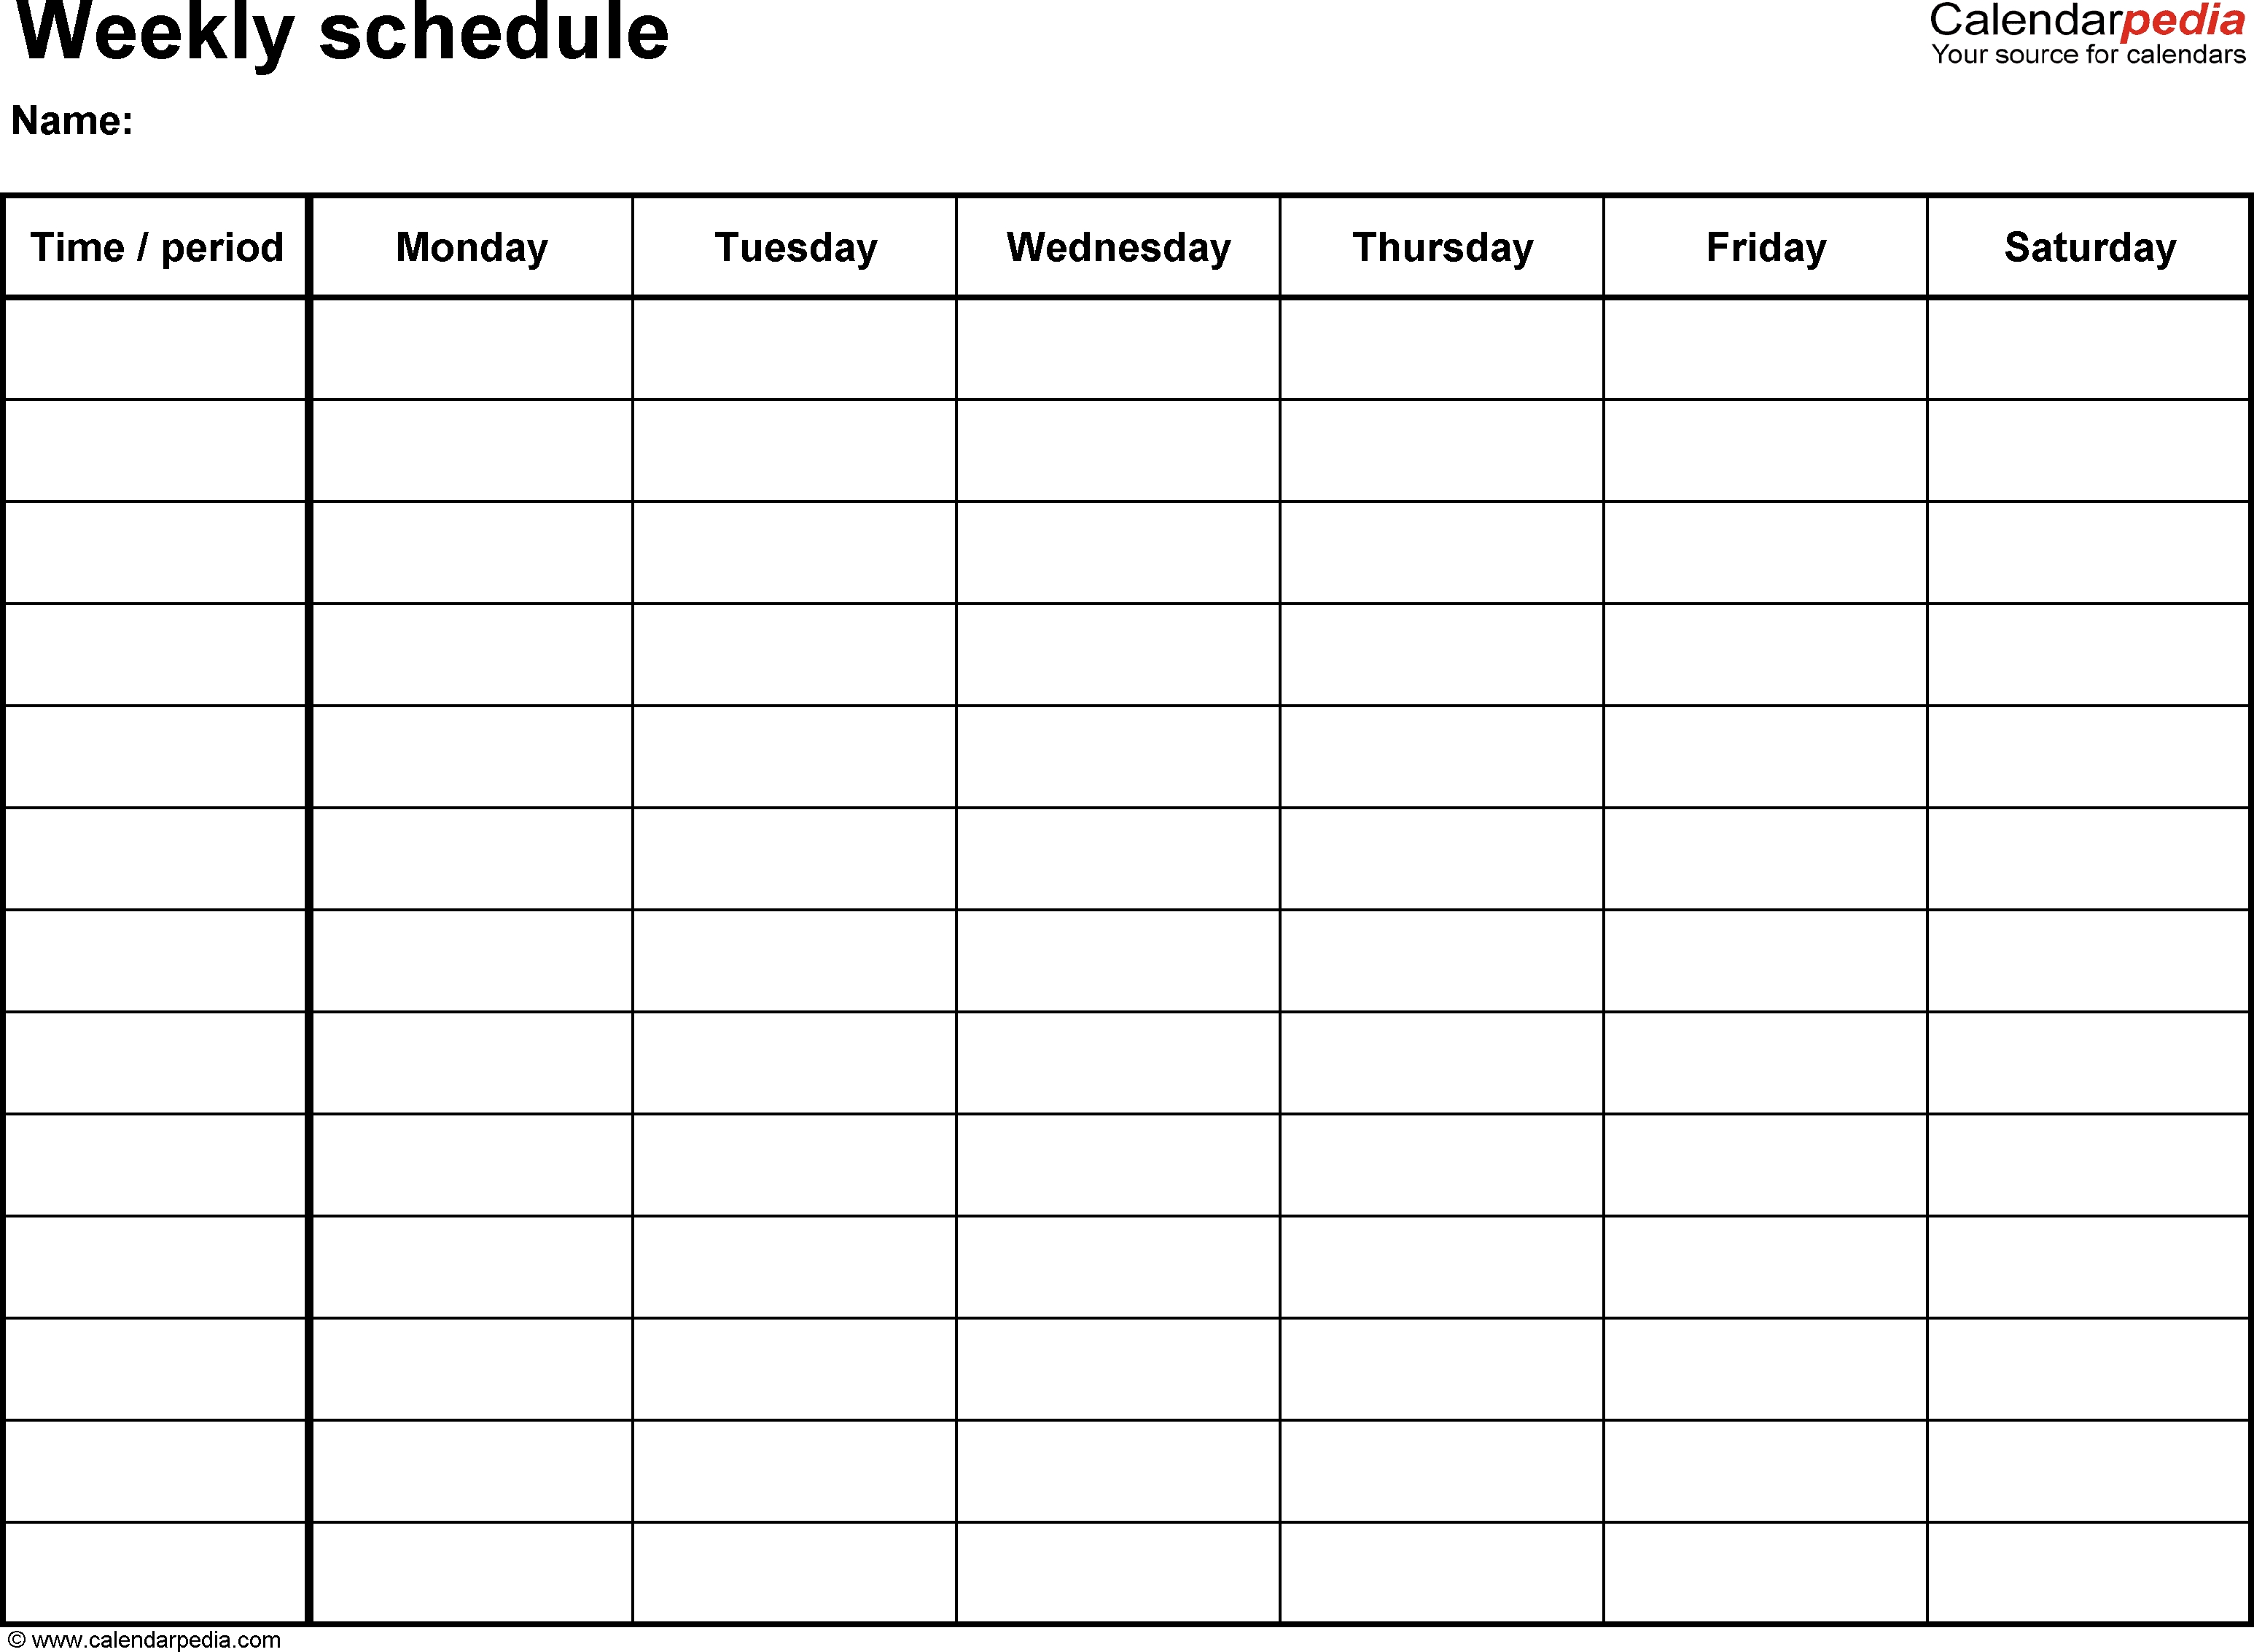 Free Weekly Schedule Templates For Excel - 18 Templates-8 Week Blank Calendar Printable